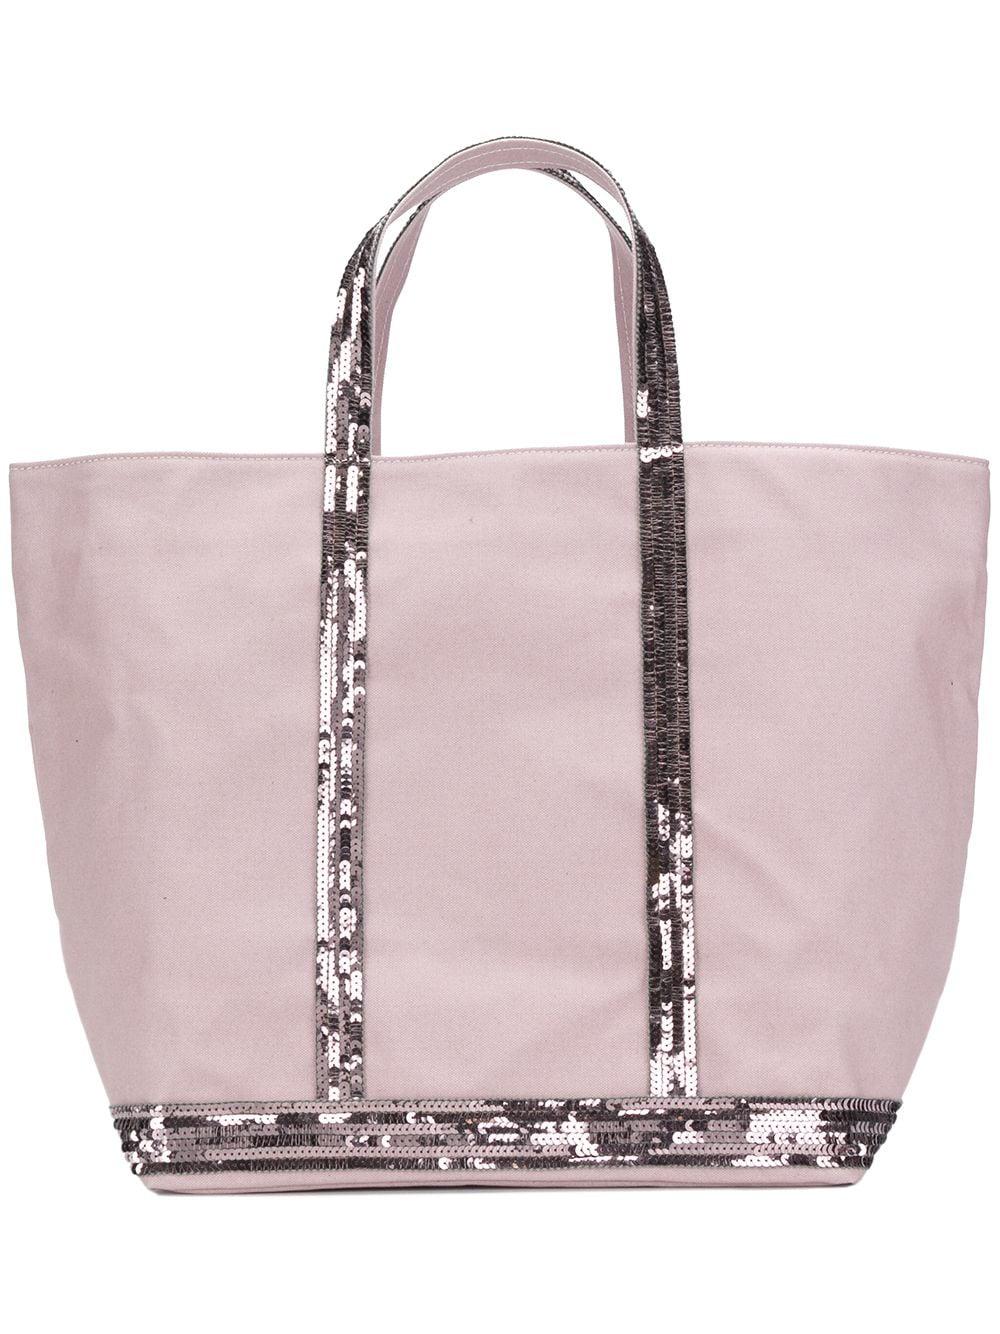 Vanessa Bruno Sequin Detail Tote Bag in Pink - Lyst